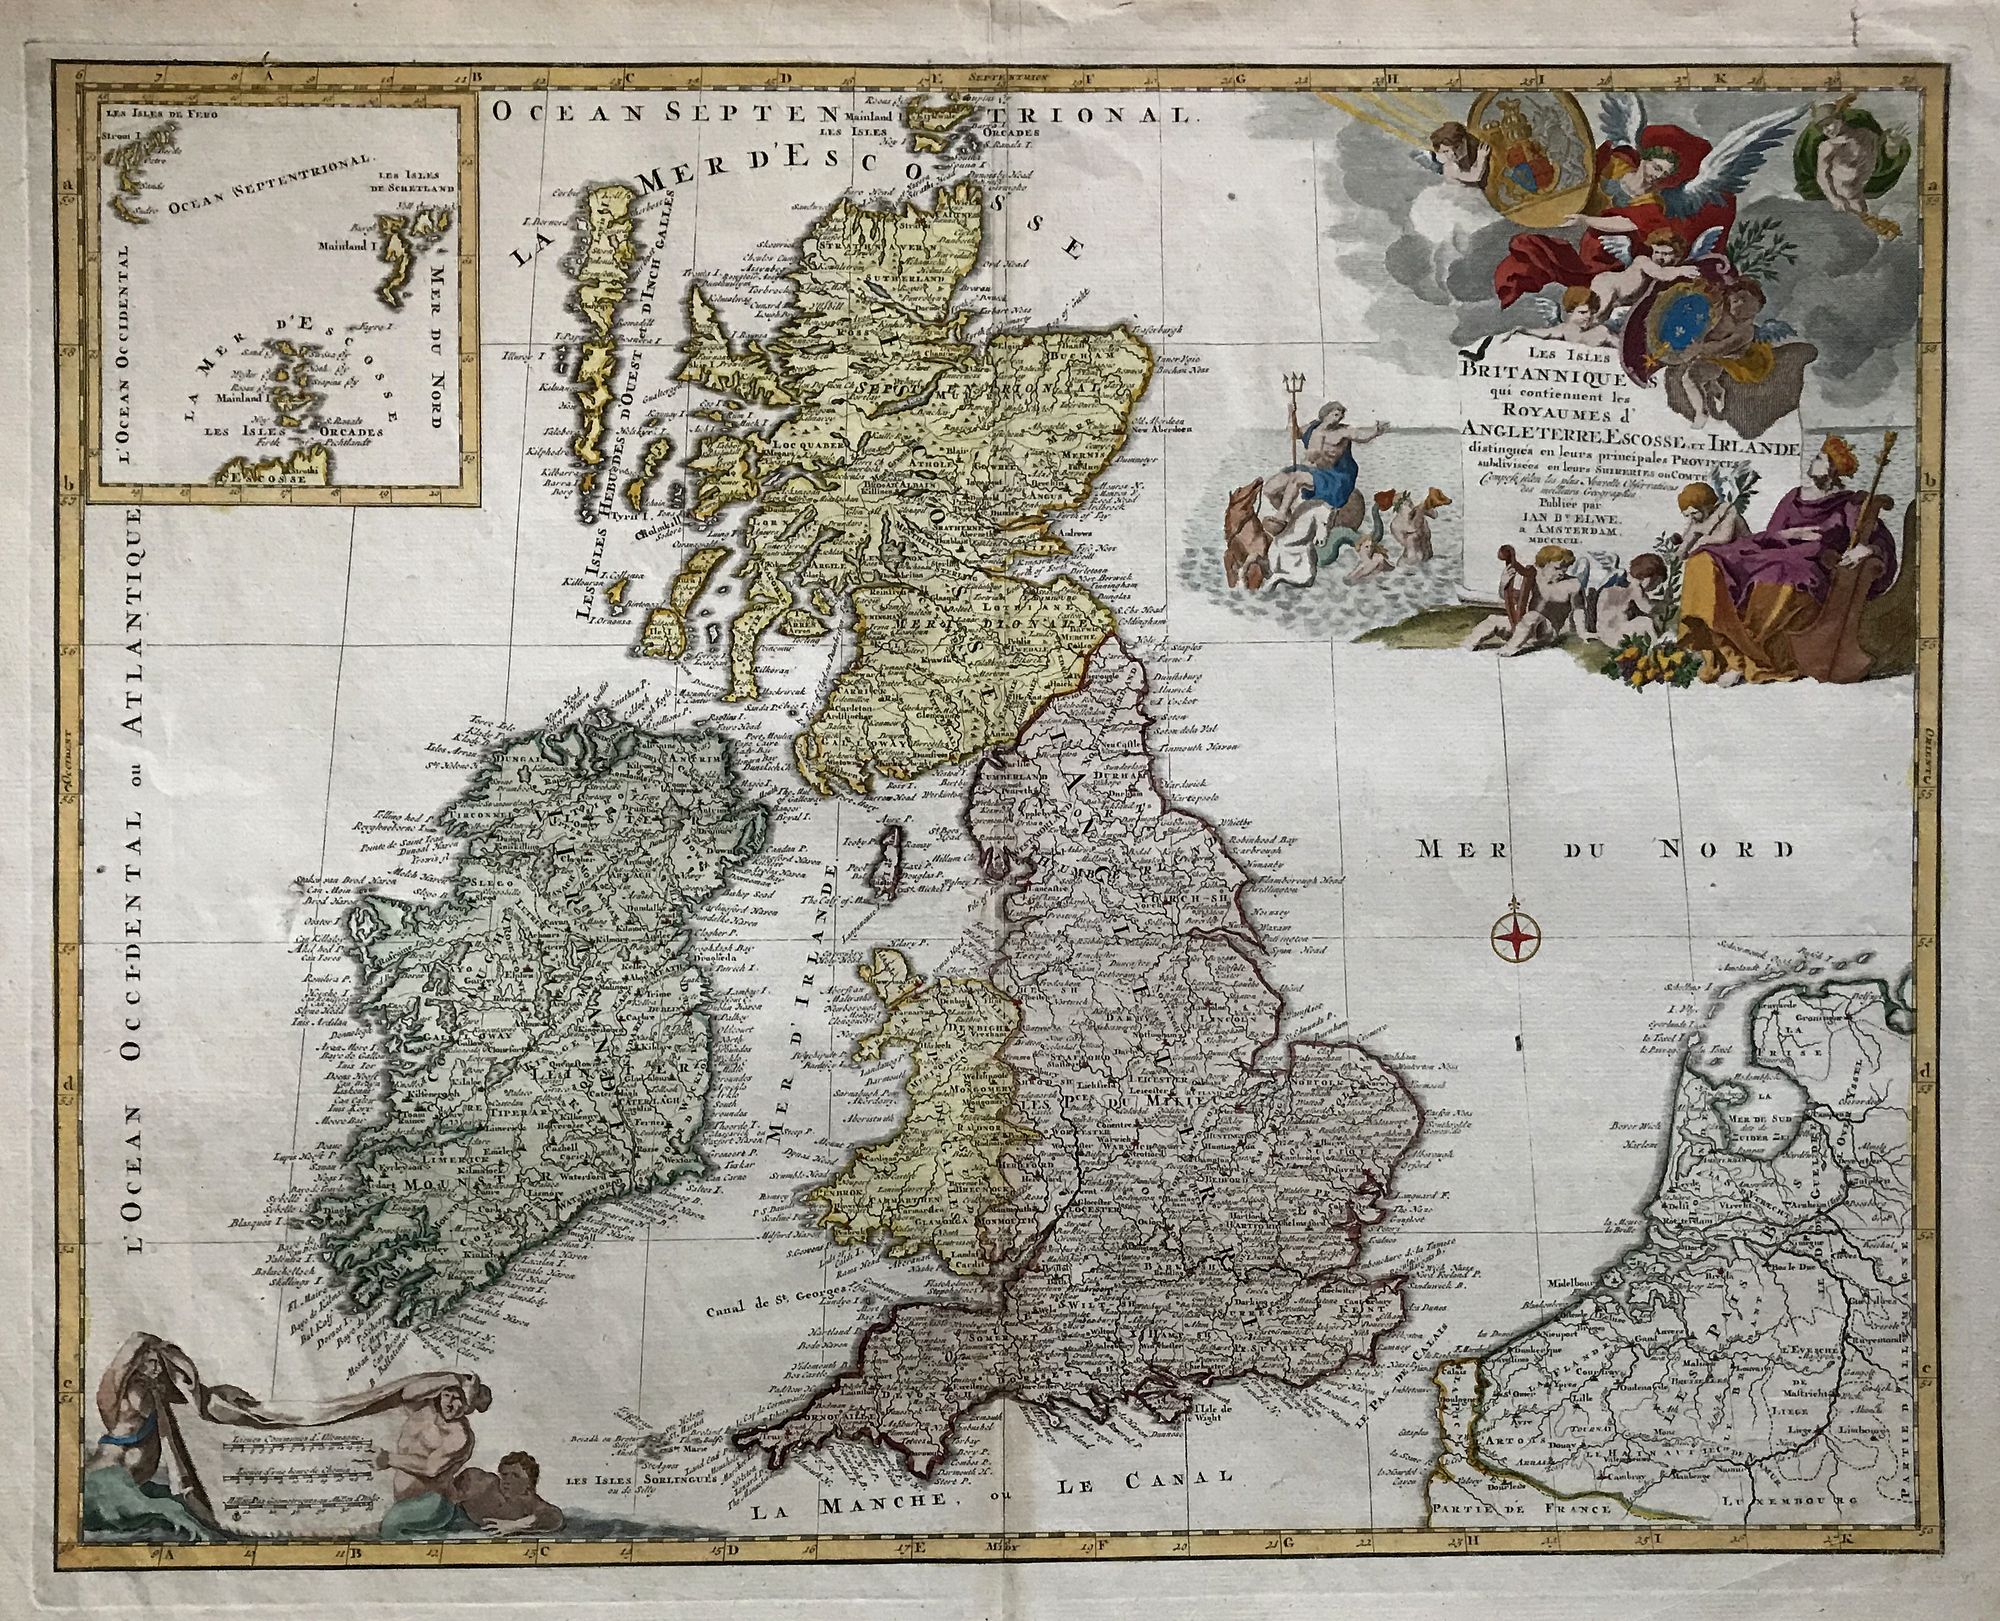 Les Isles Britannique qui contiennent les Royaumes d'Angleterre, Ecosse et Irlande.